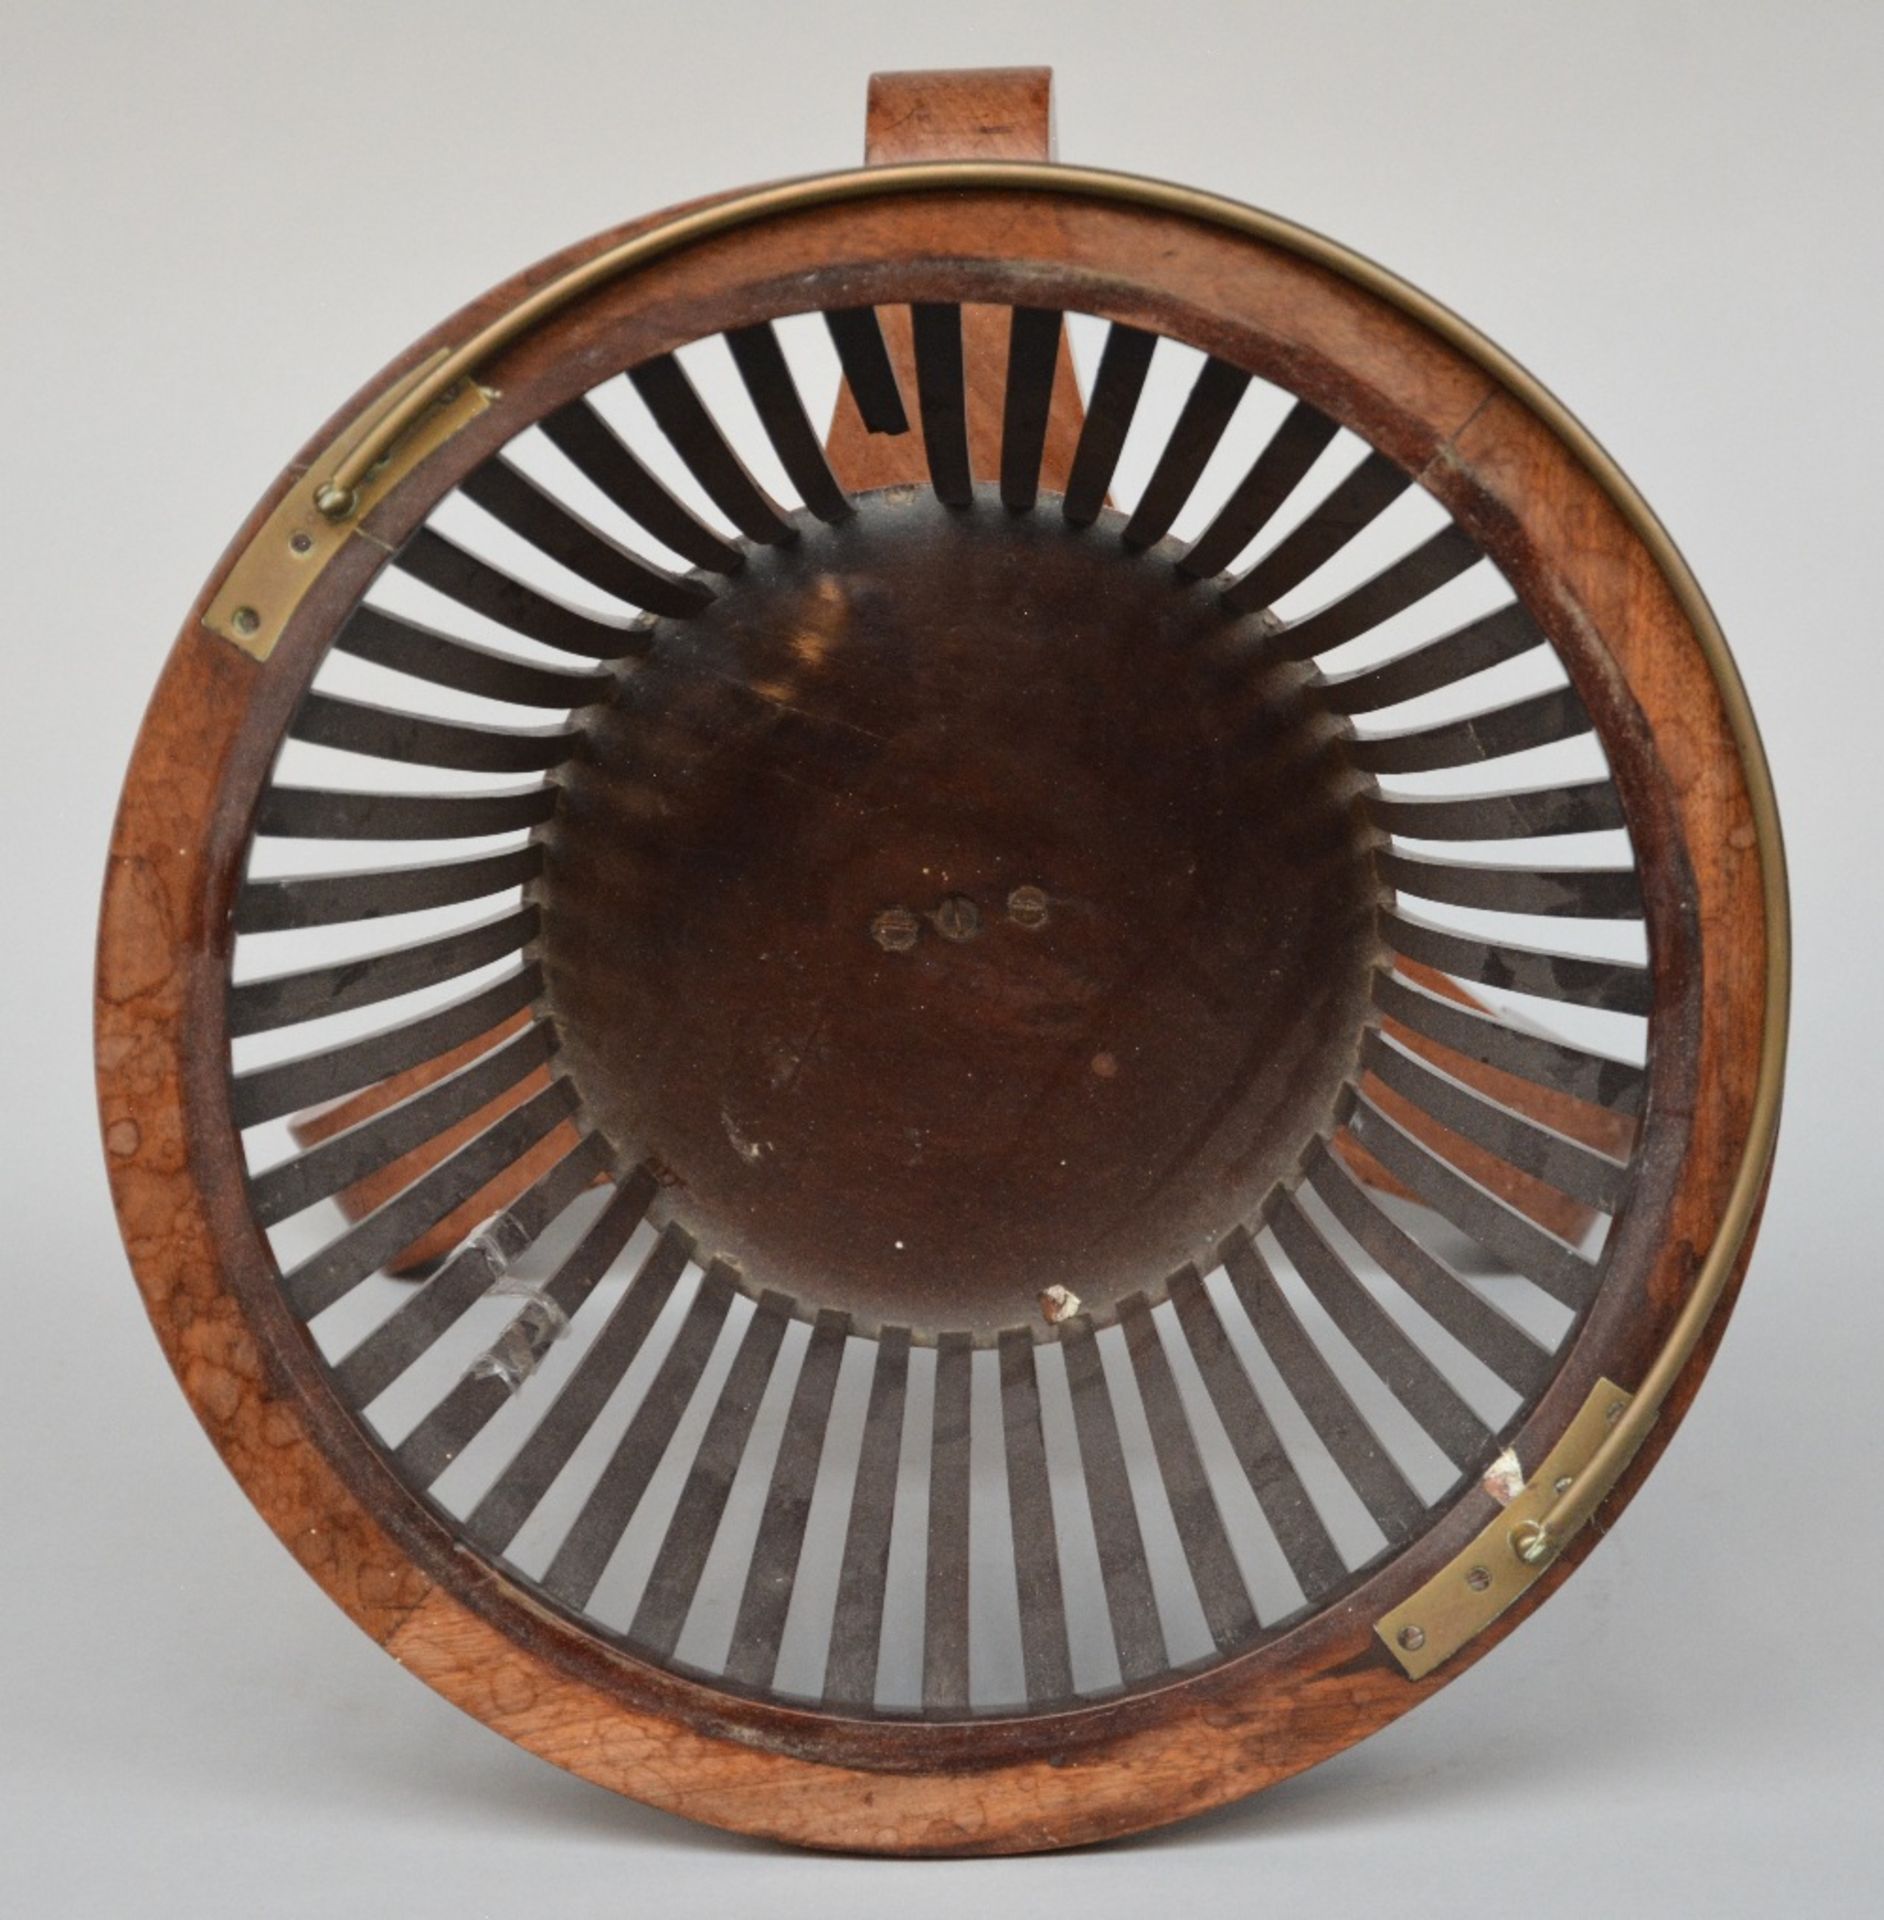 Mahogany and brass tea stove, 19thC, H 48 - Diameter 37,5 cm (minor damage) - Image 6 of 6